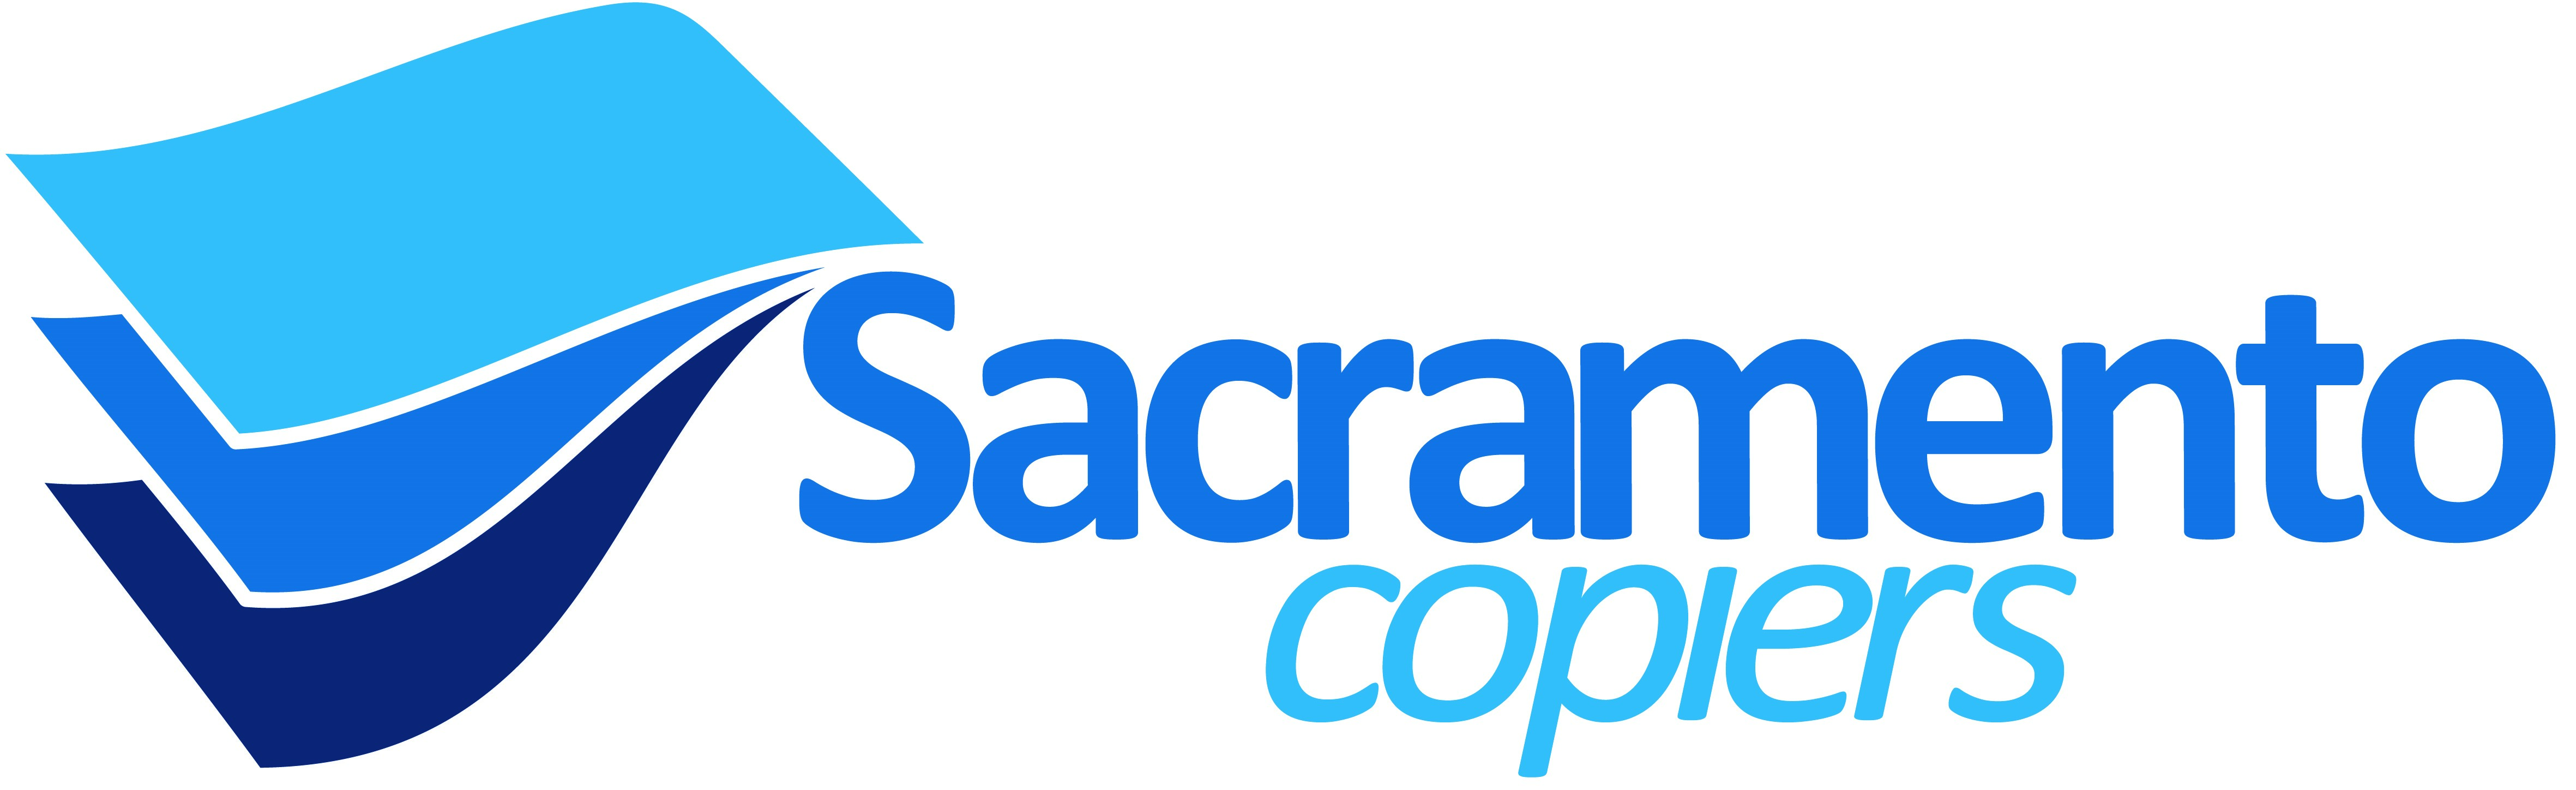 Copier Logo - Logo Sacramento FA 40x12cm Copiers. Copier Leasing